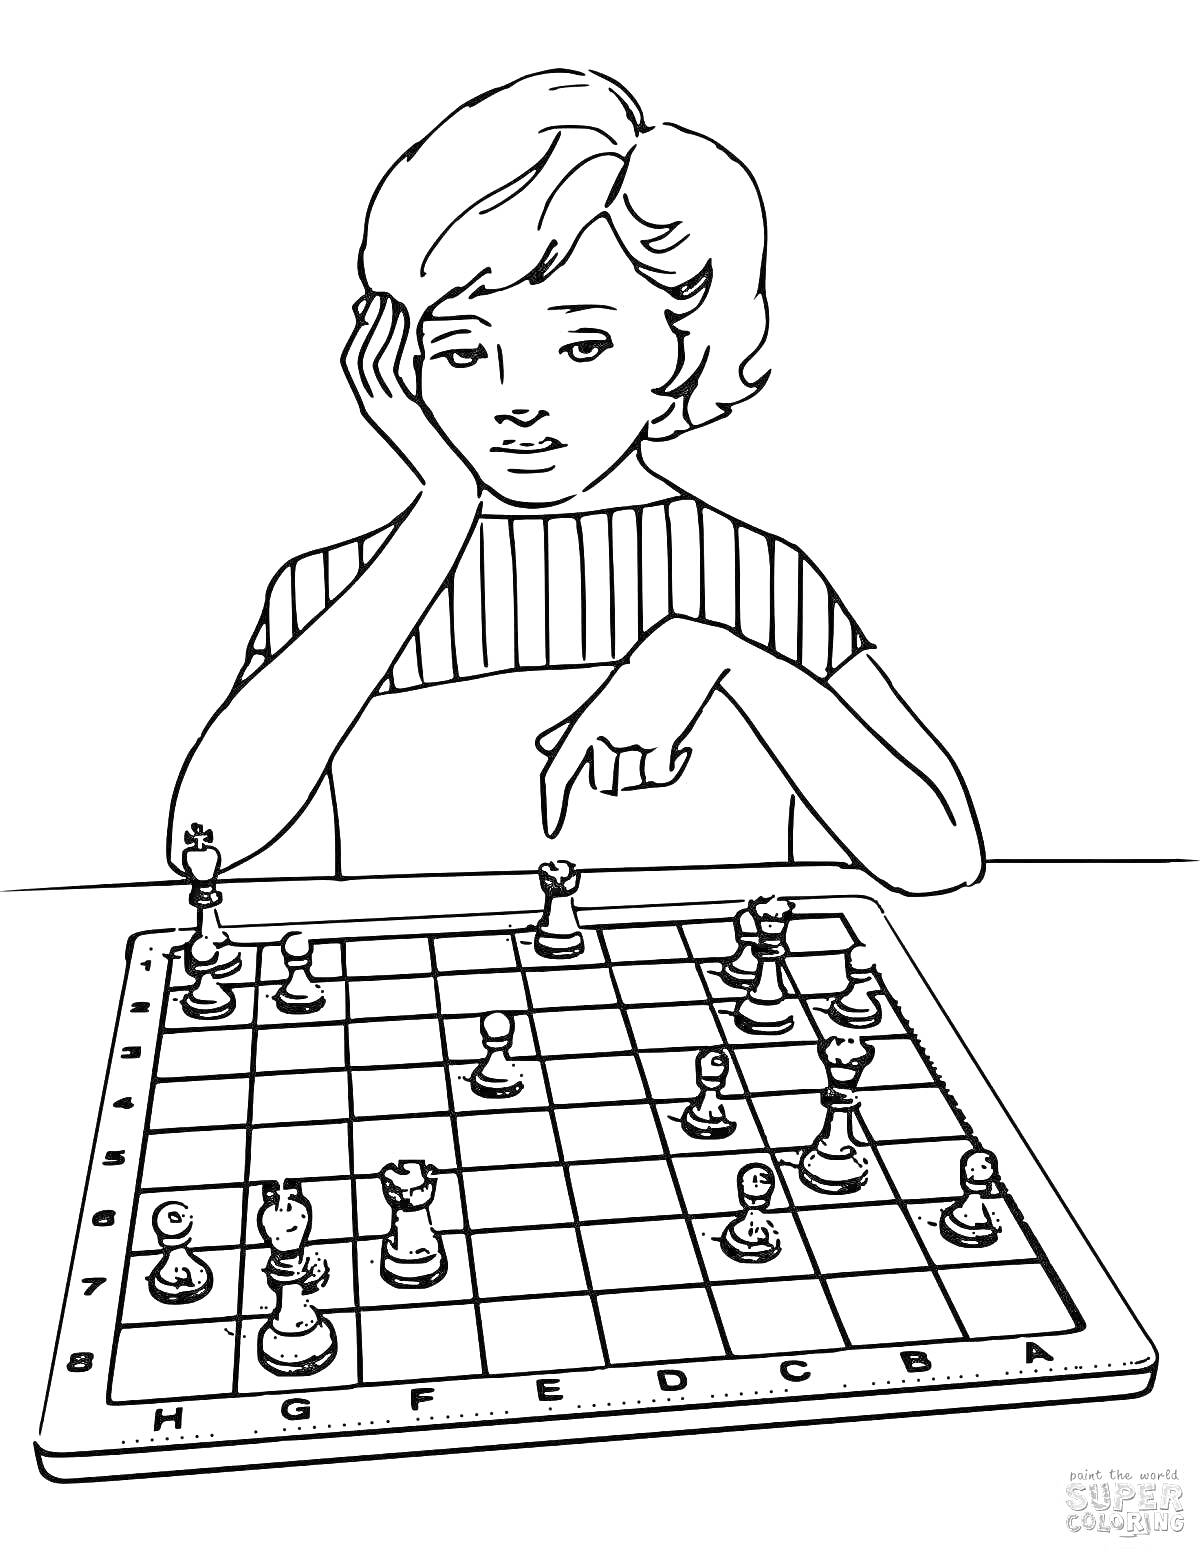 Раскраска Ребенок, играющий в шахматы на шахматной доске